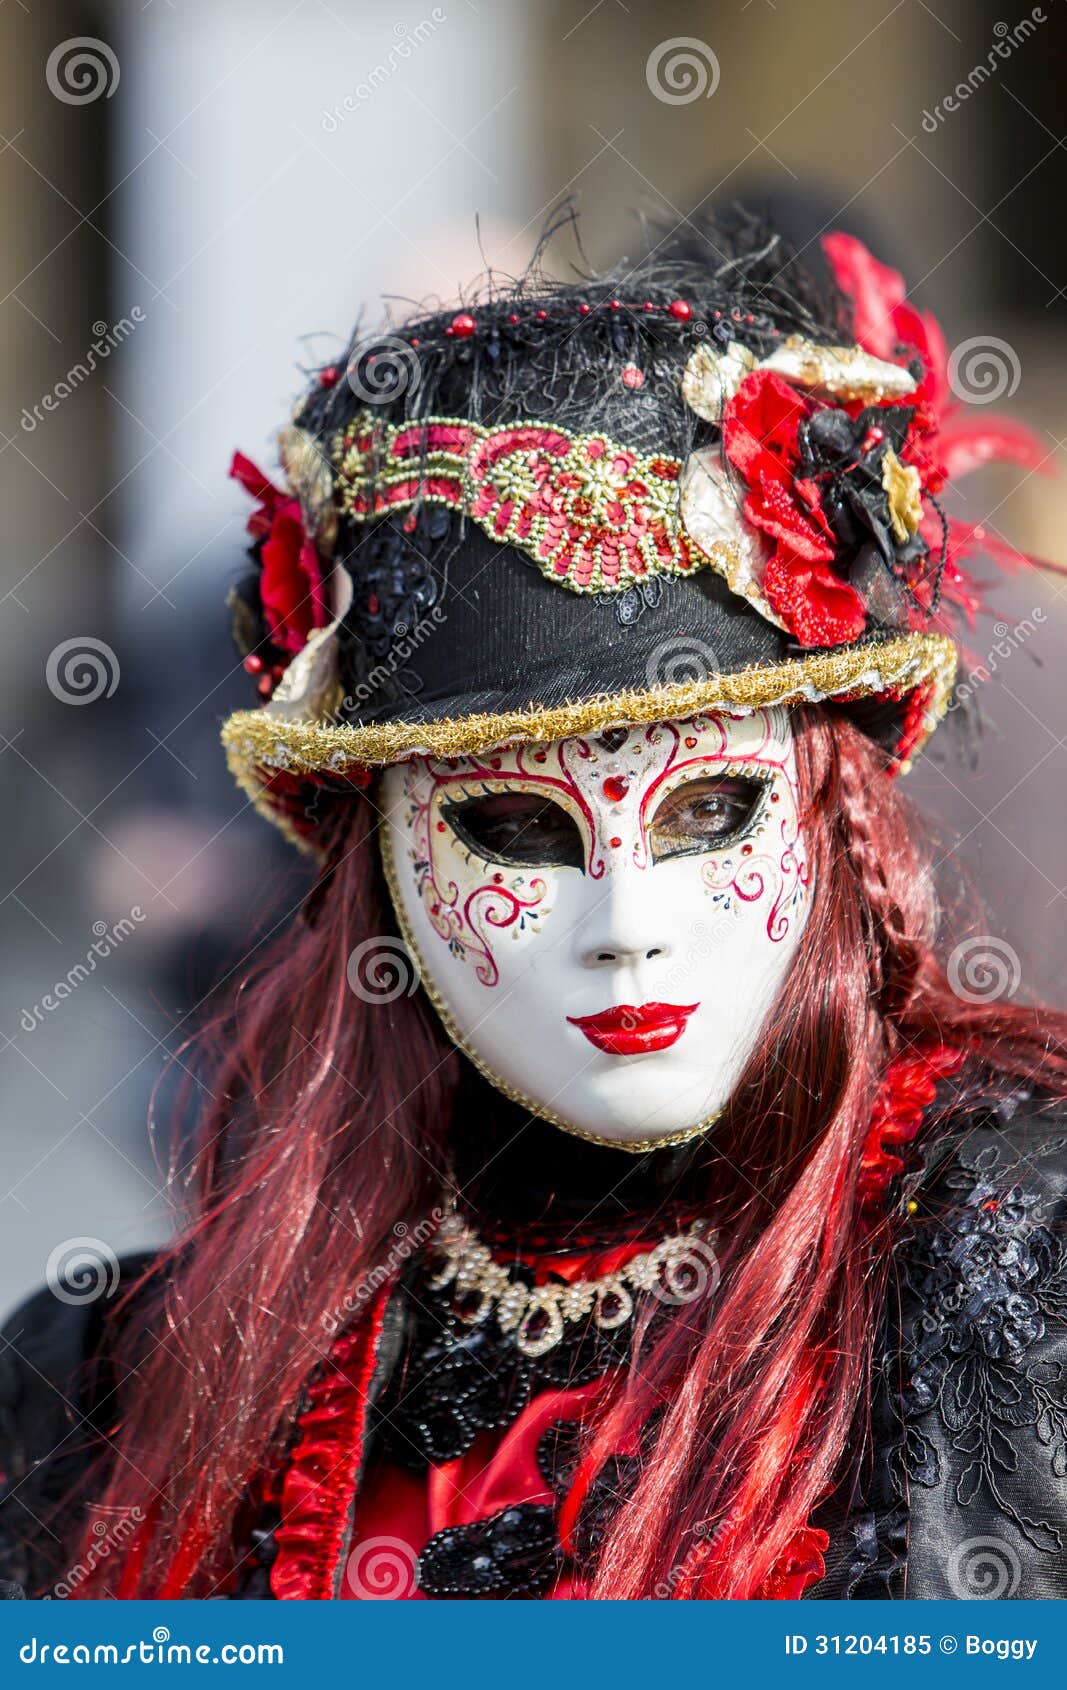 Traditional Venetian Carnival Mask Editorial Image - Image: 31204185